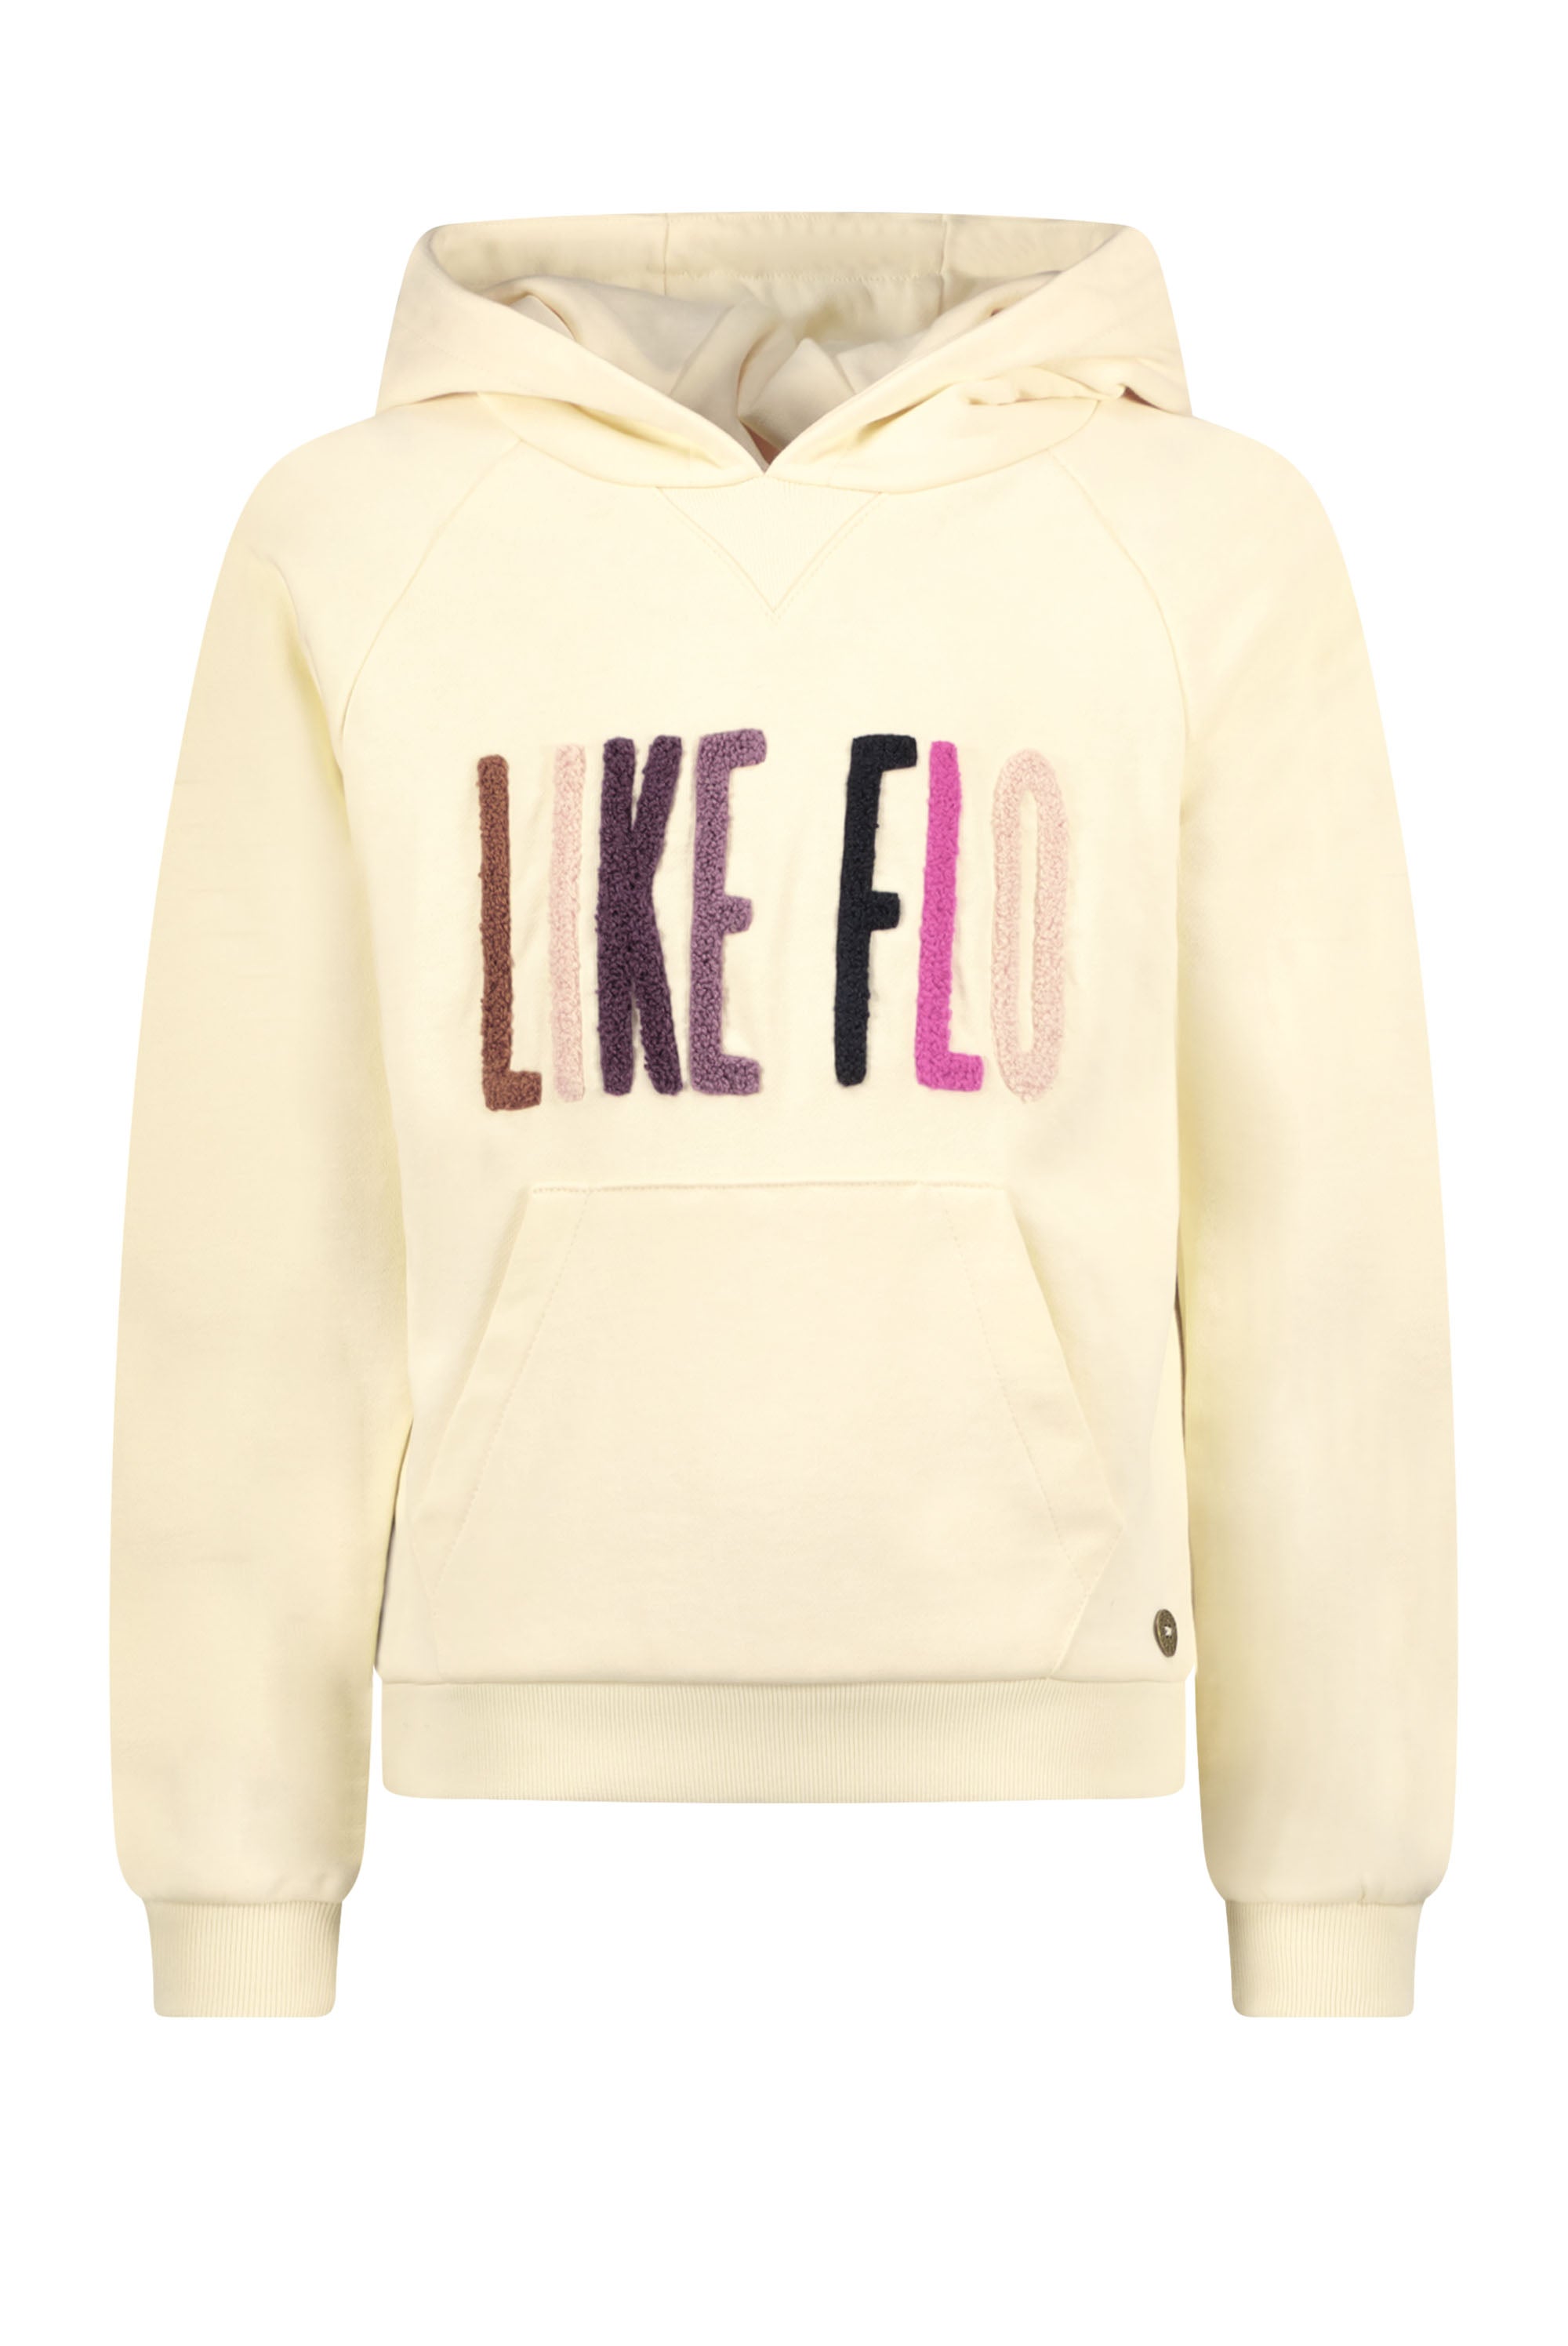 Like Flo Flo girls hooded sweater